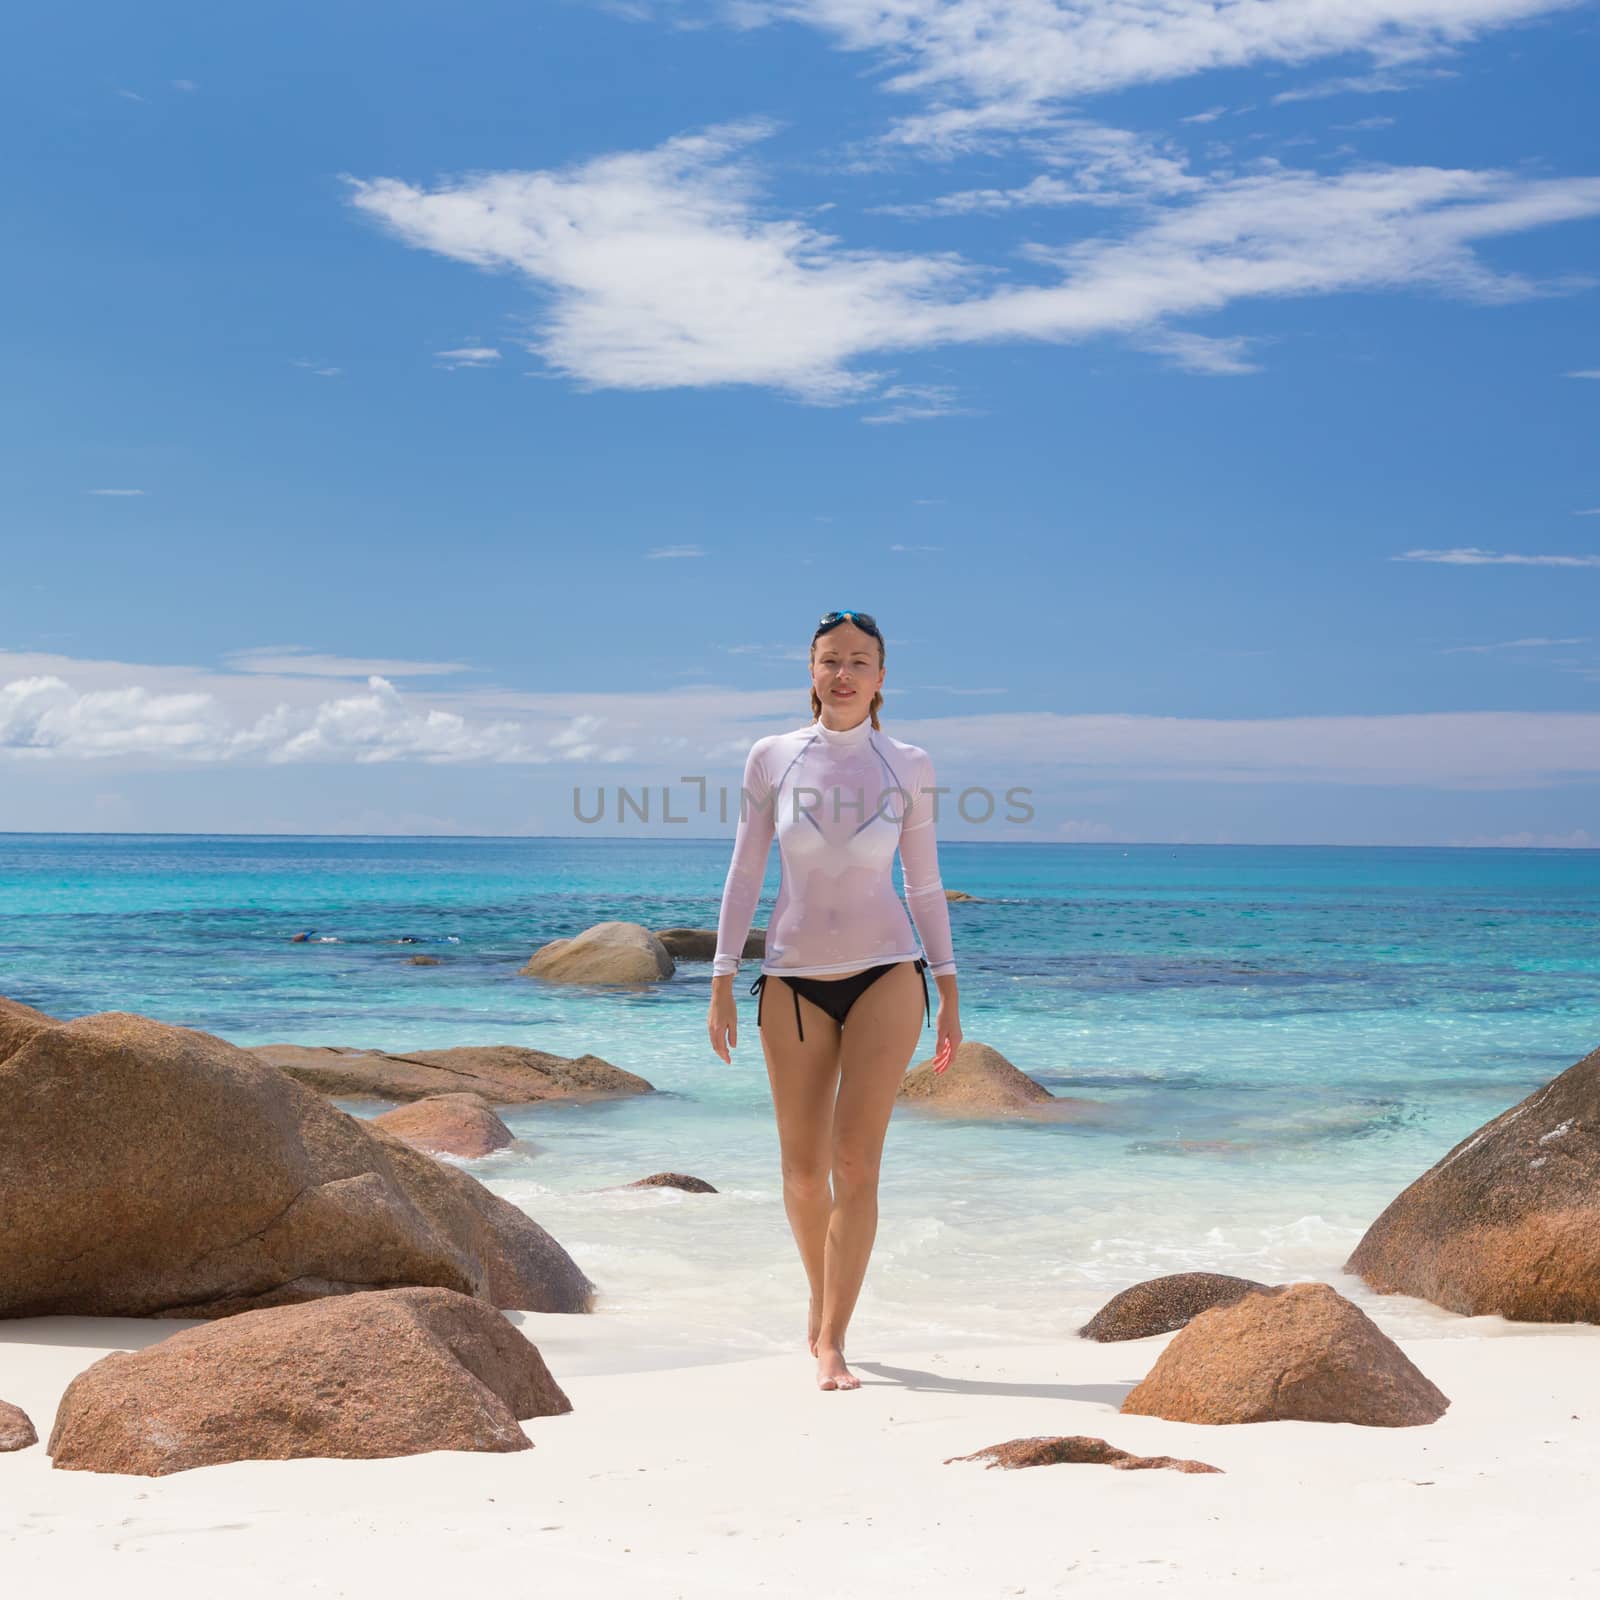 Woman wearing stylish bikini and lycra top enjoying swimming and snorkeling at amazing Anse Lazio beach on Praslin Island, Seychelles. Summer vacations on picture perfect tropical beach concept.